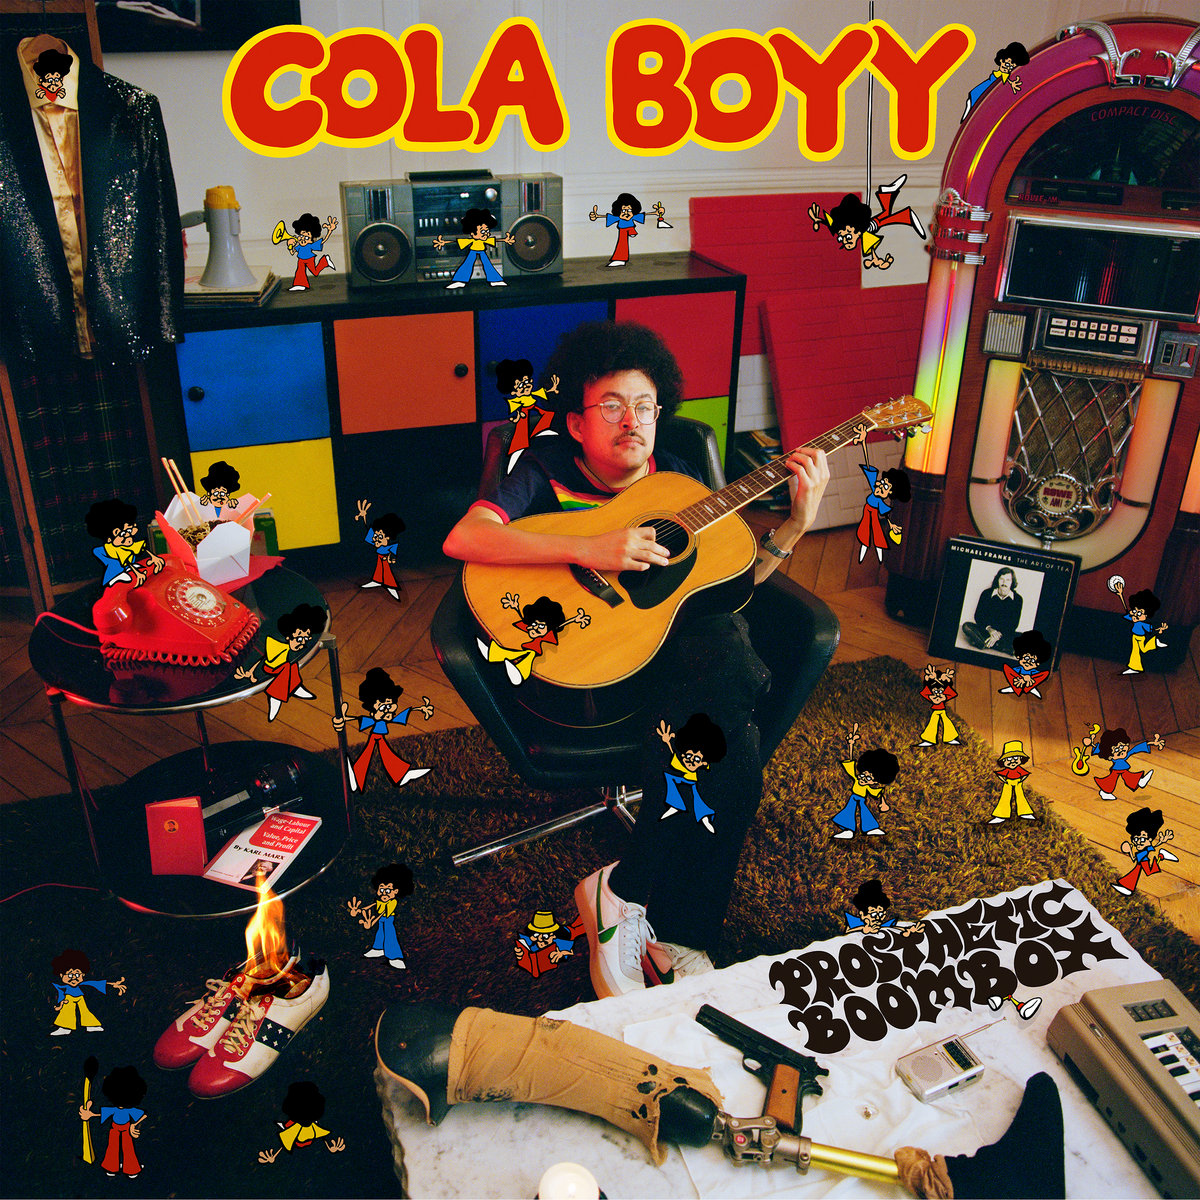 Cola Boyy Prosthetic Boombox cover artwork